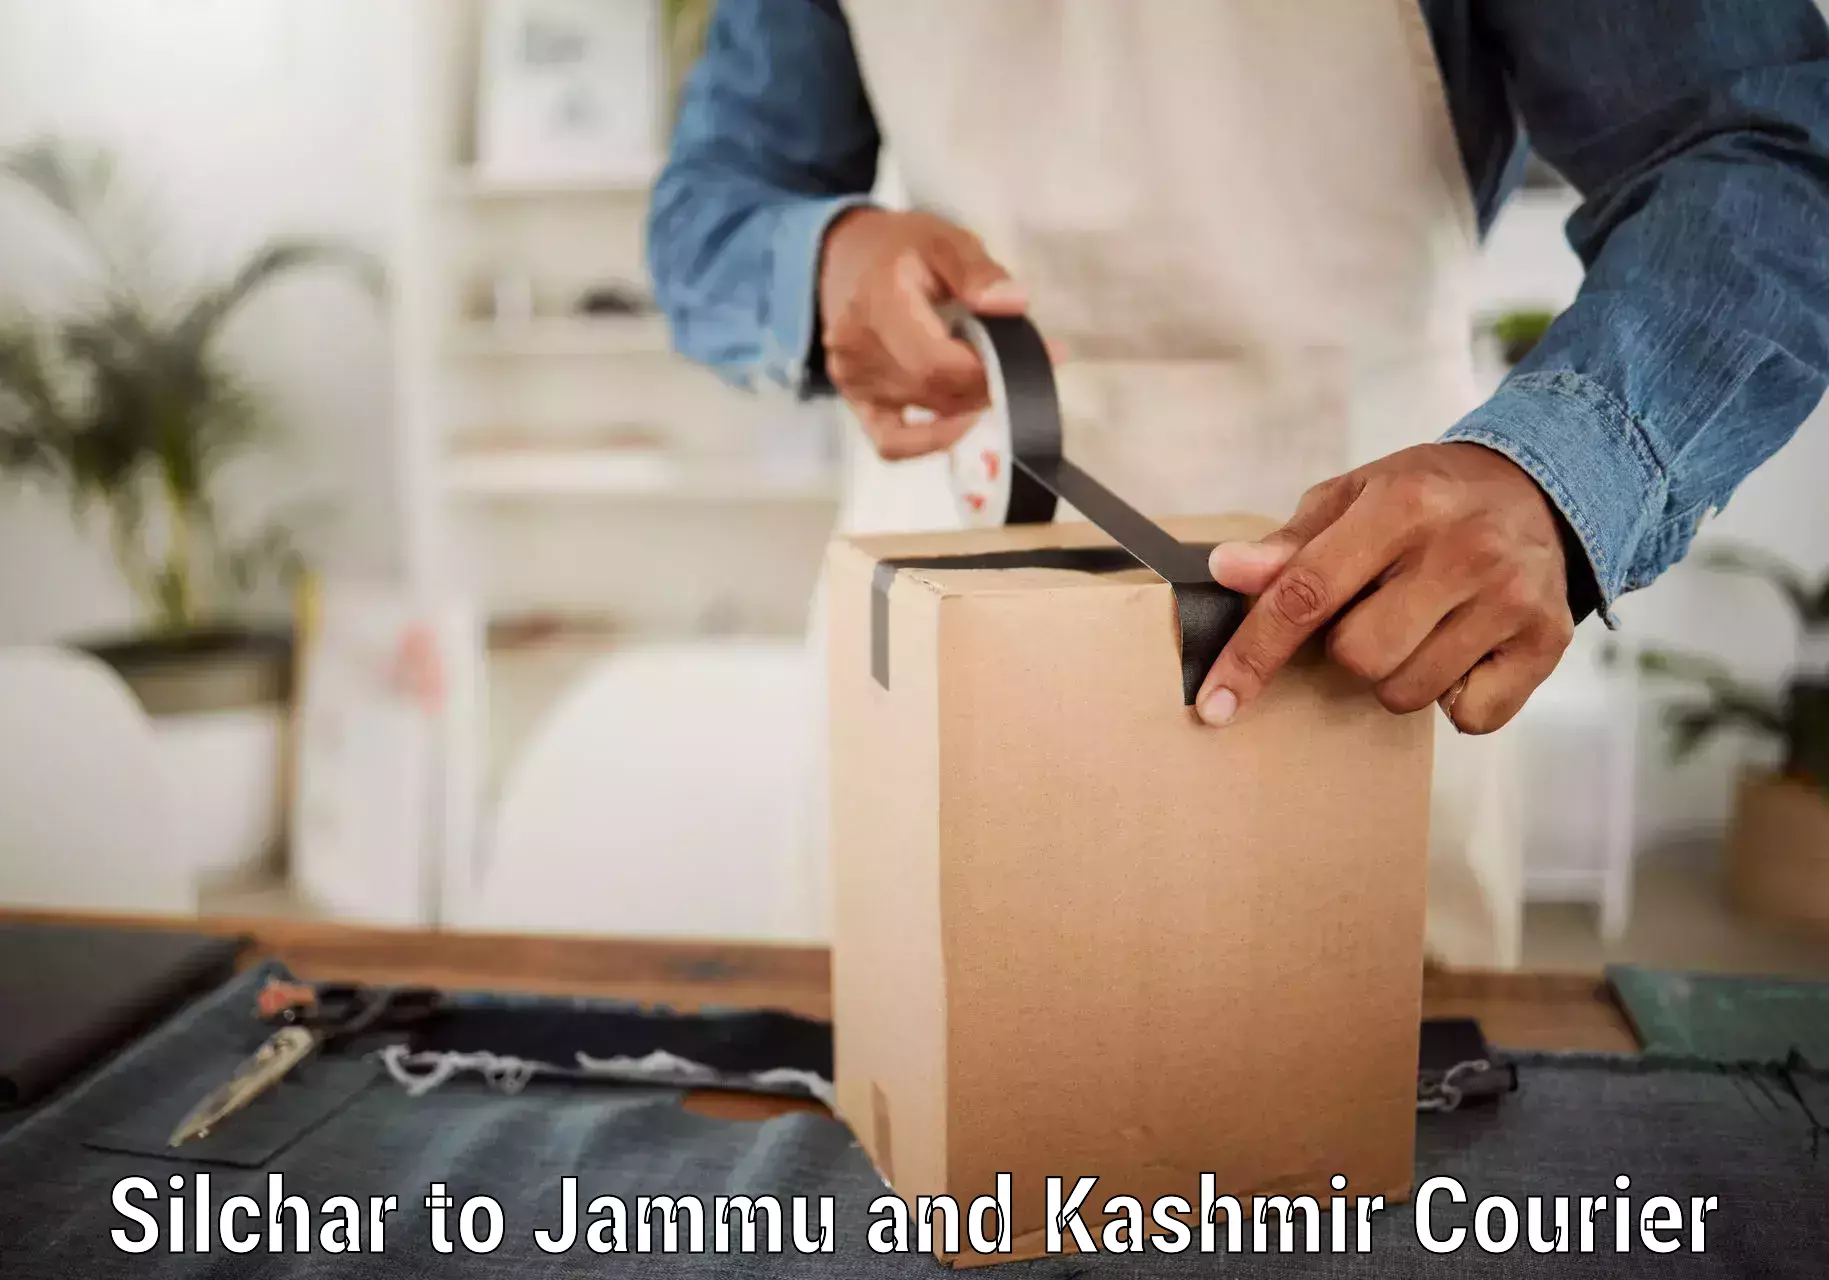 Efficient order fulfillment Silchar to Jammu and Kashmir